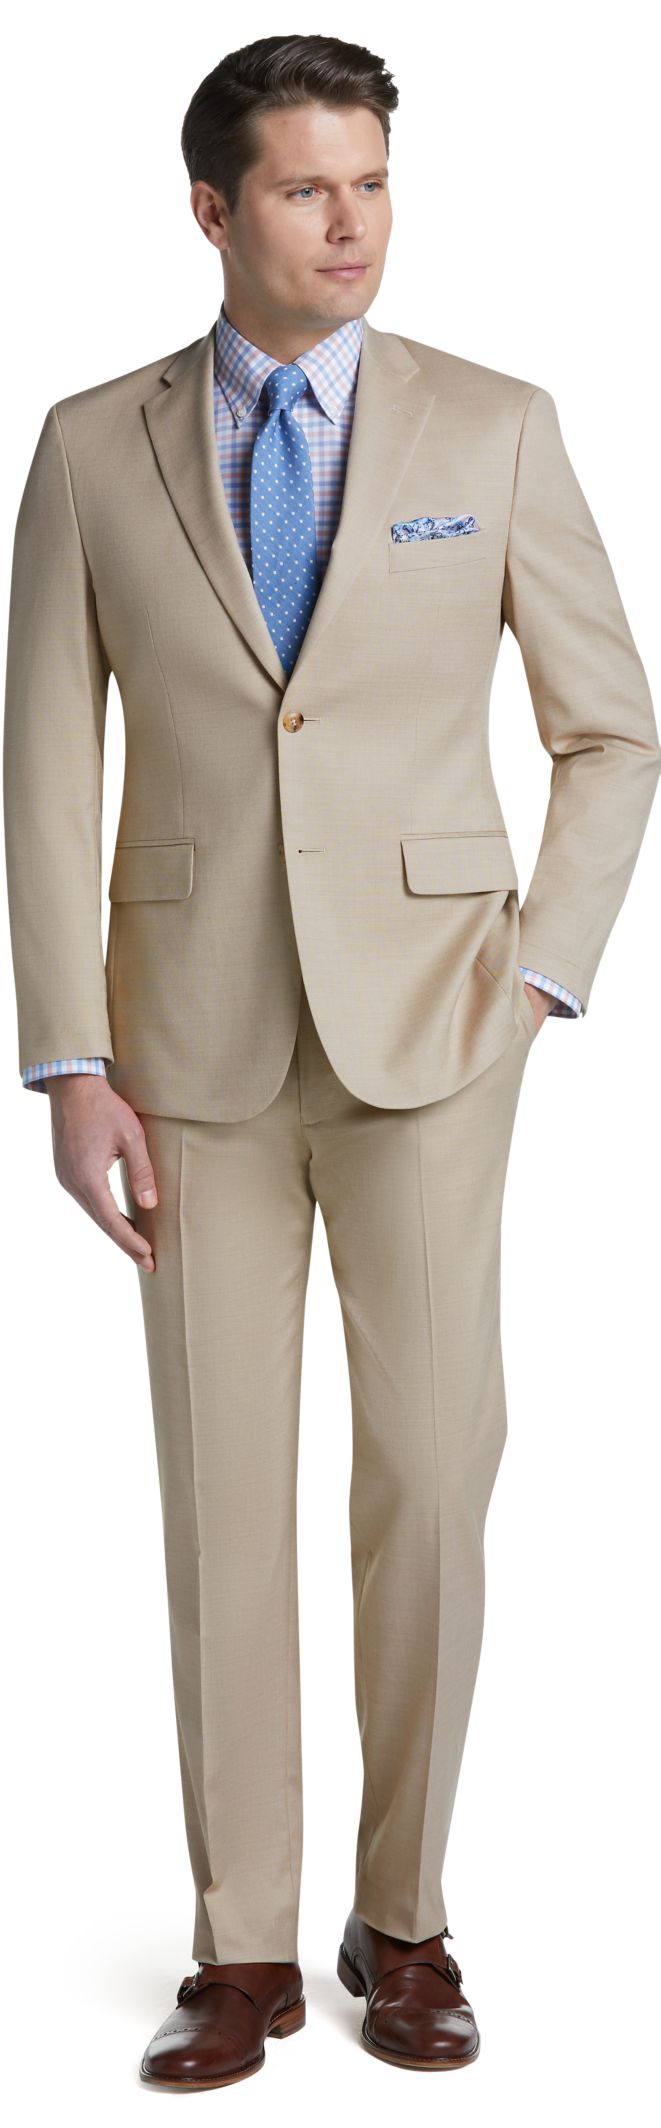 Men's Suits | Shop Black, Grey & Navy Suits | JoS. A. Bank